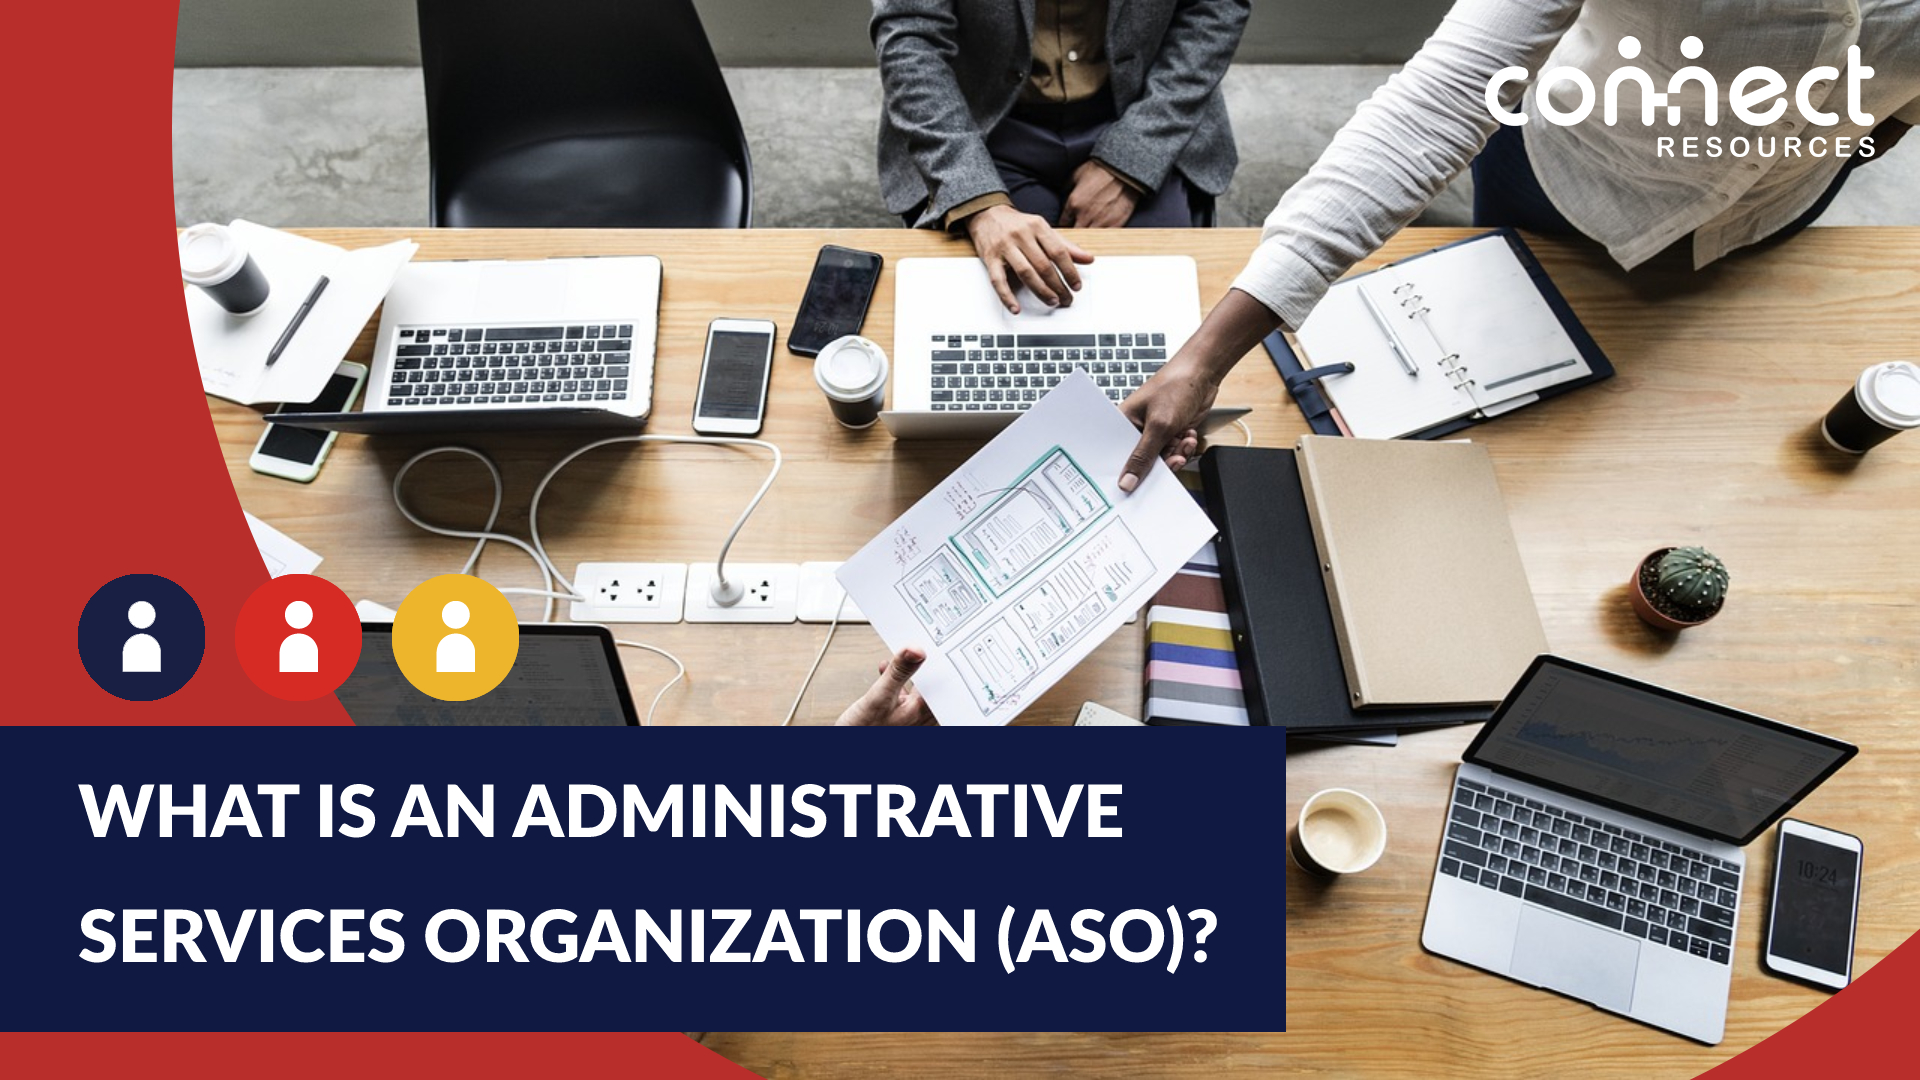 Administrative Services Organization